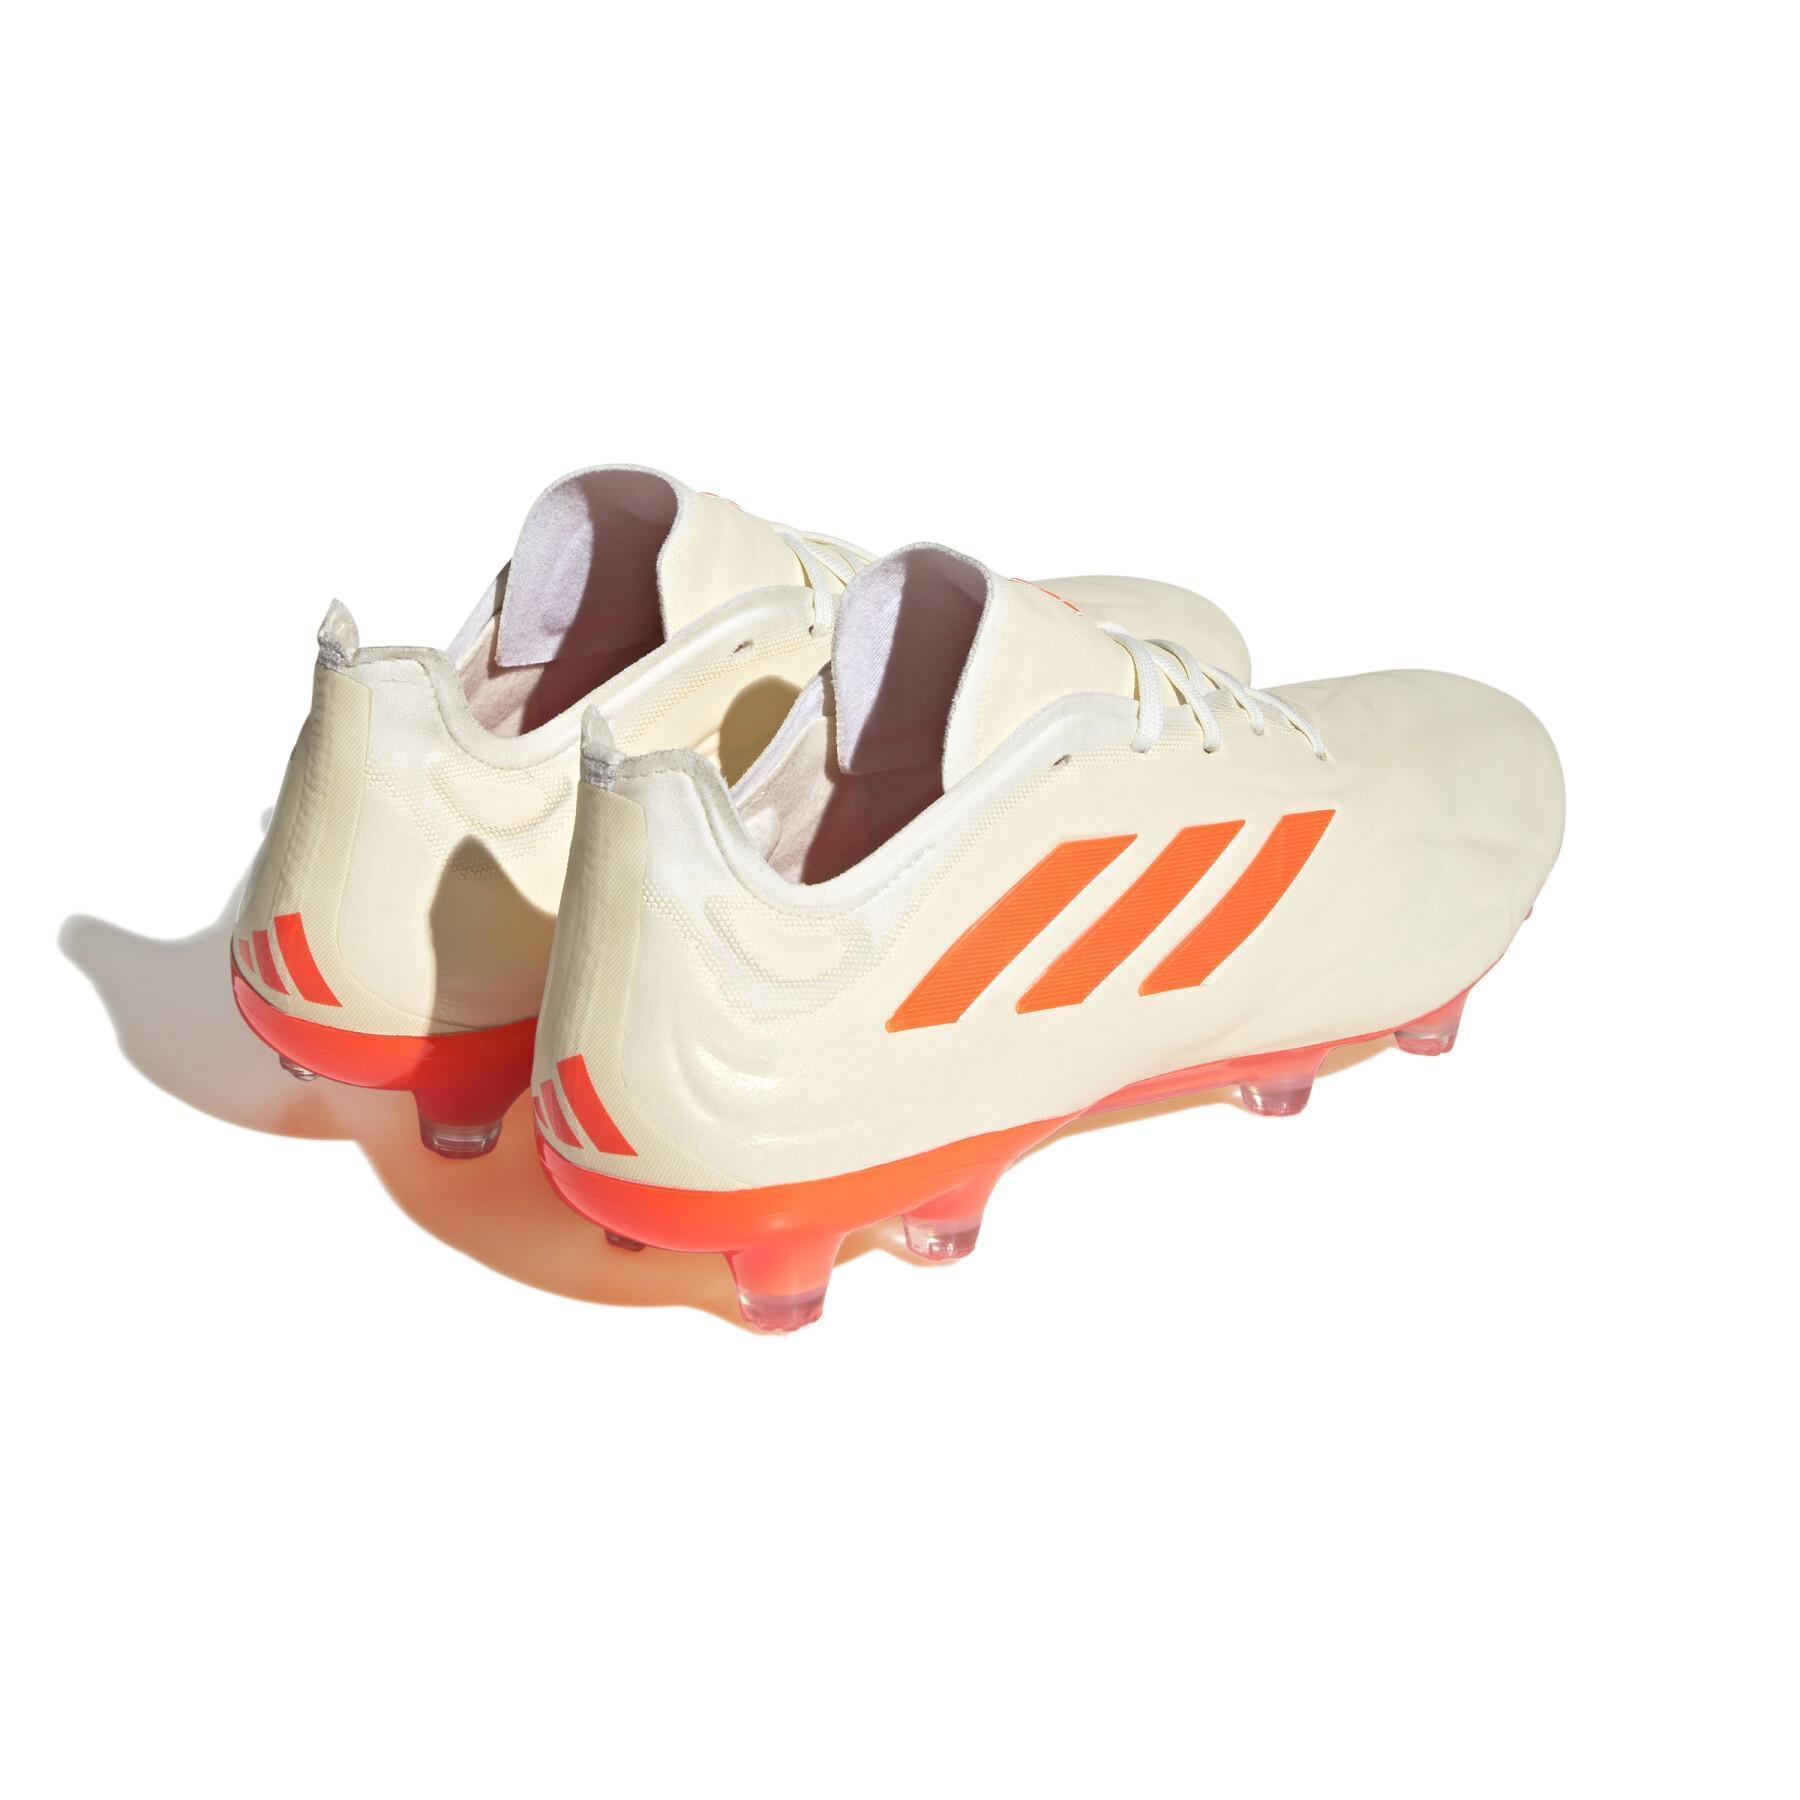 Chaussures de football adidas Copa Pure.1 FG Heatspawn Pack